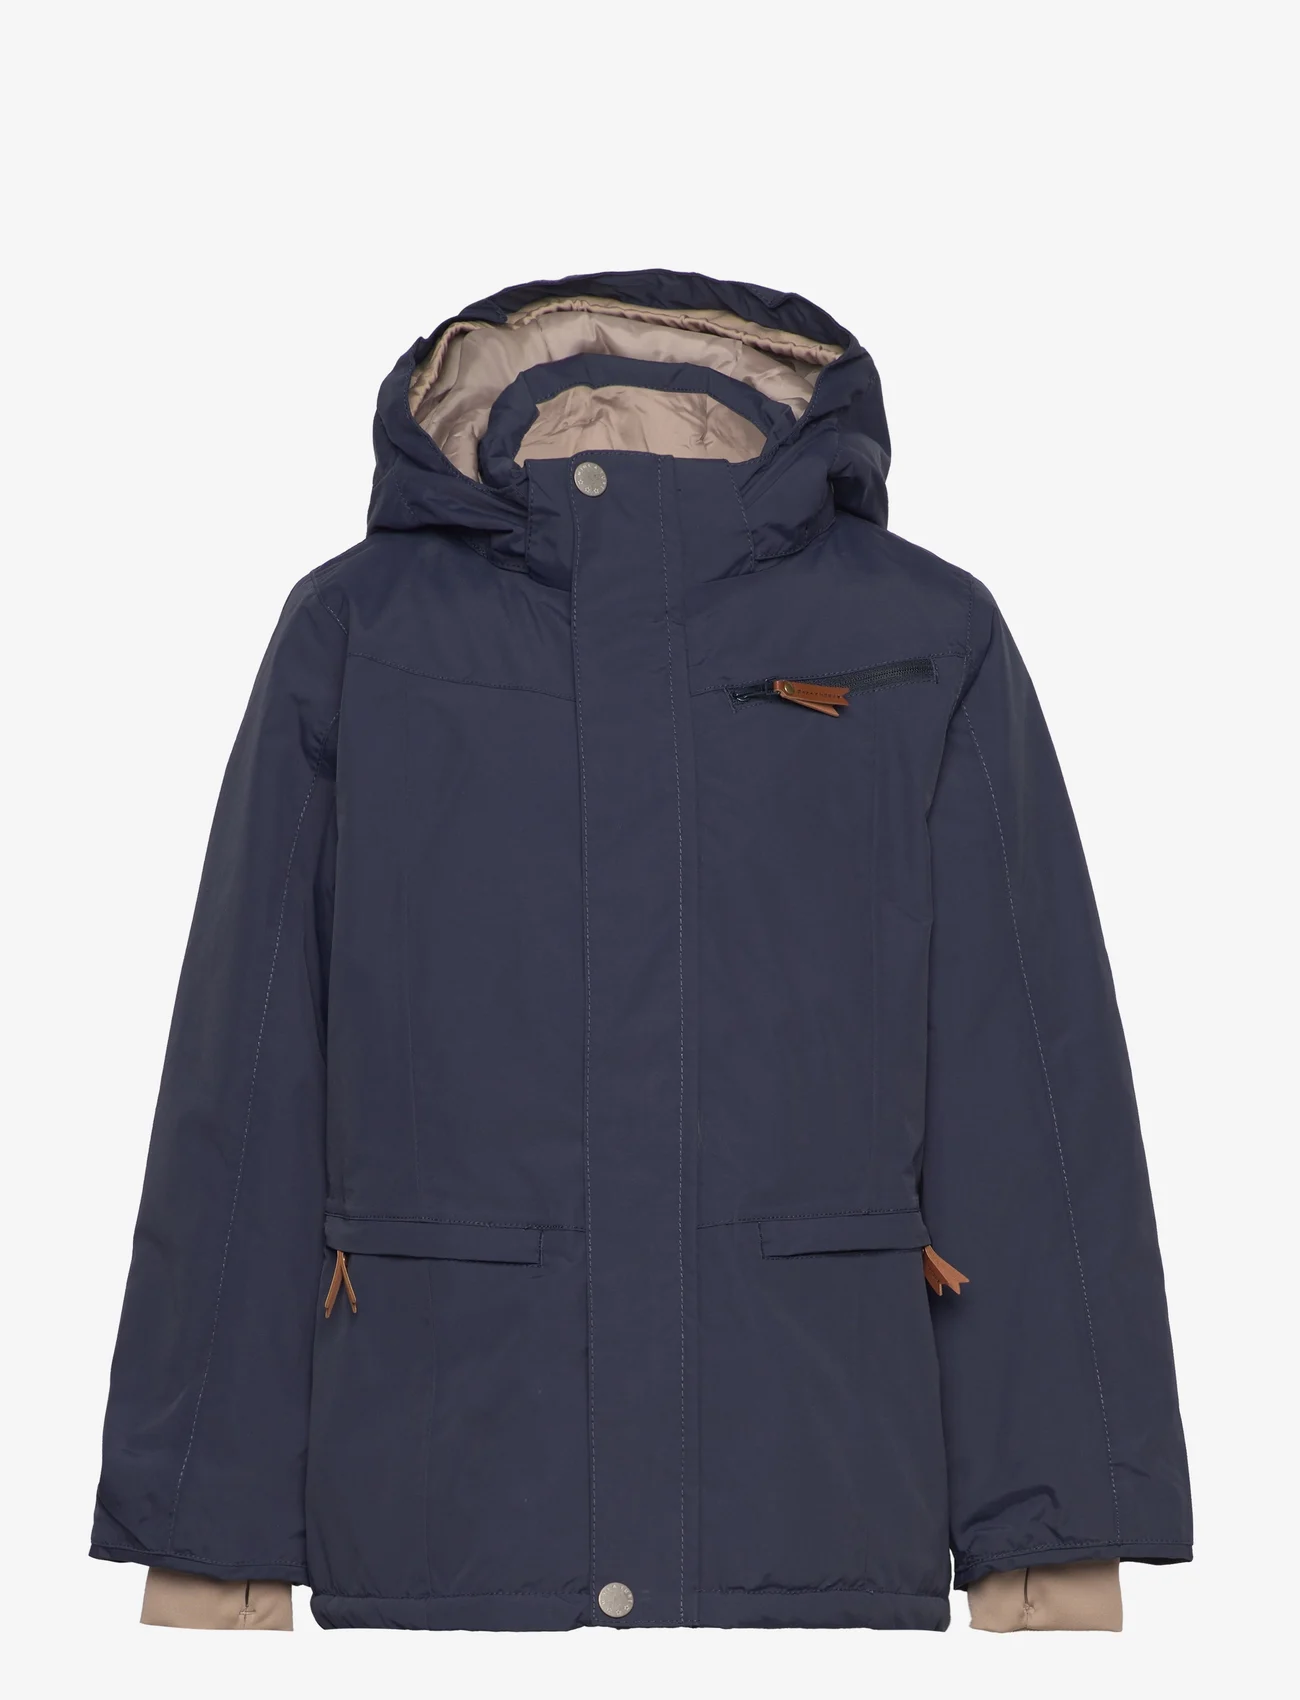 Mini A Ture - Vestyn winter jacket. GRS - winterjassen - blue nights - 0